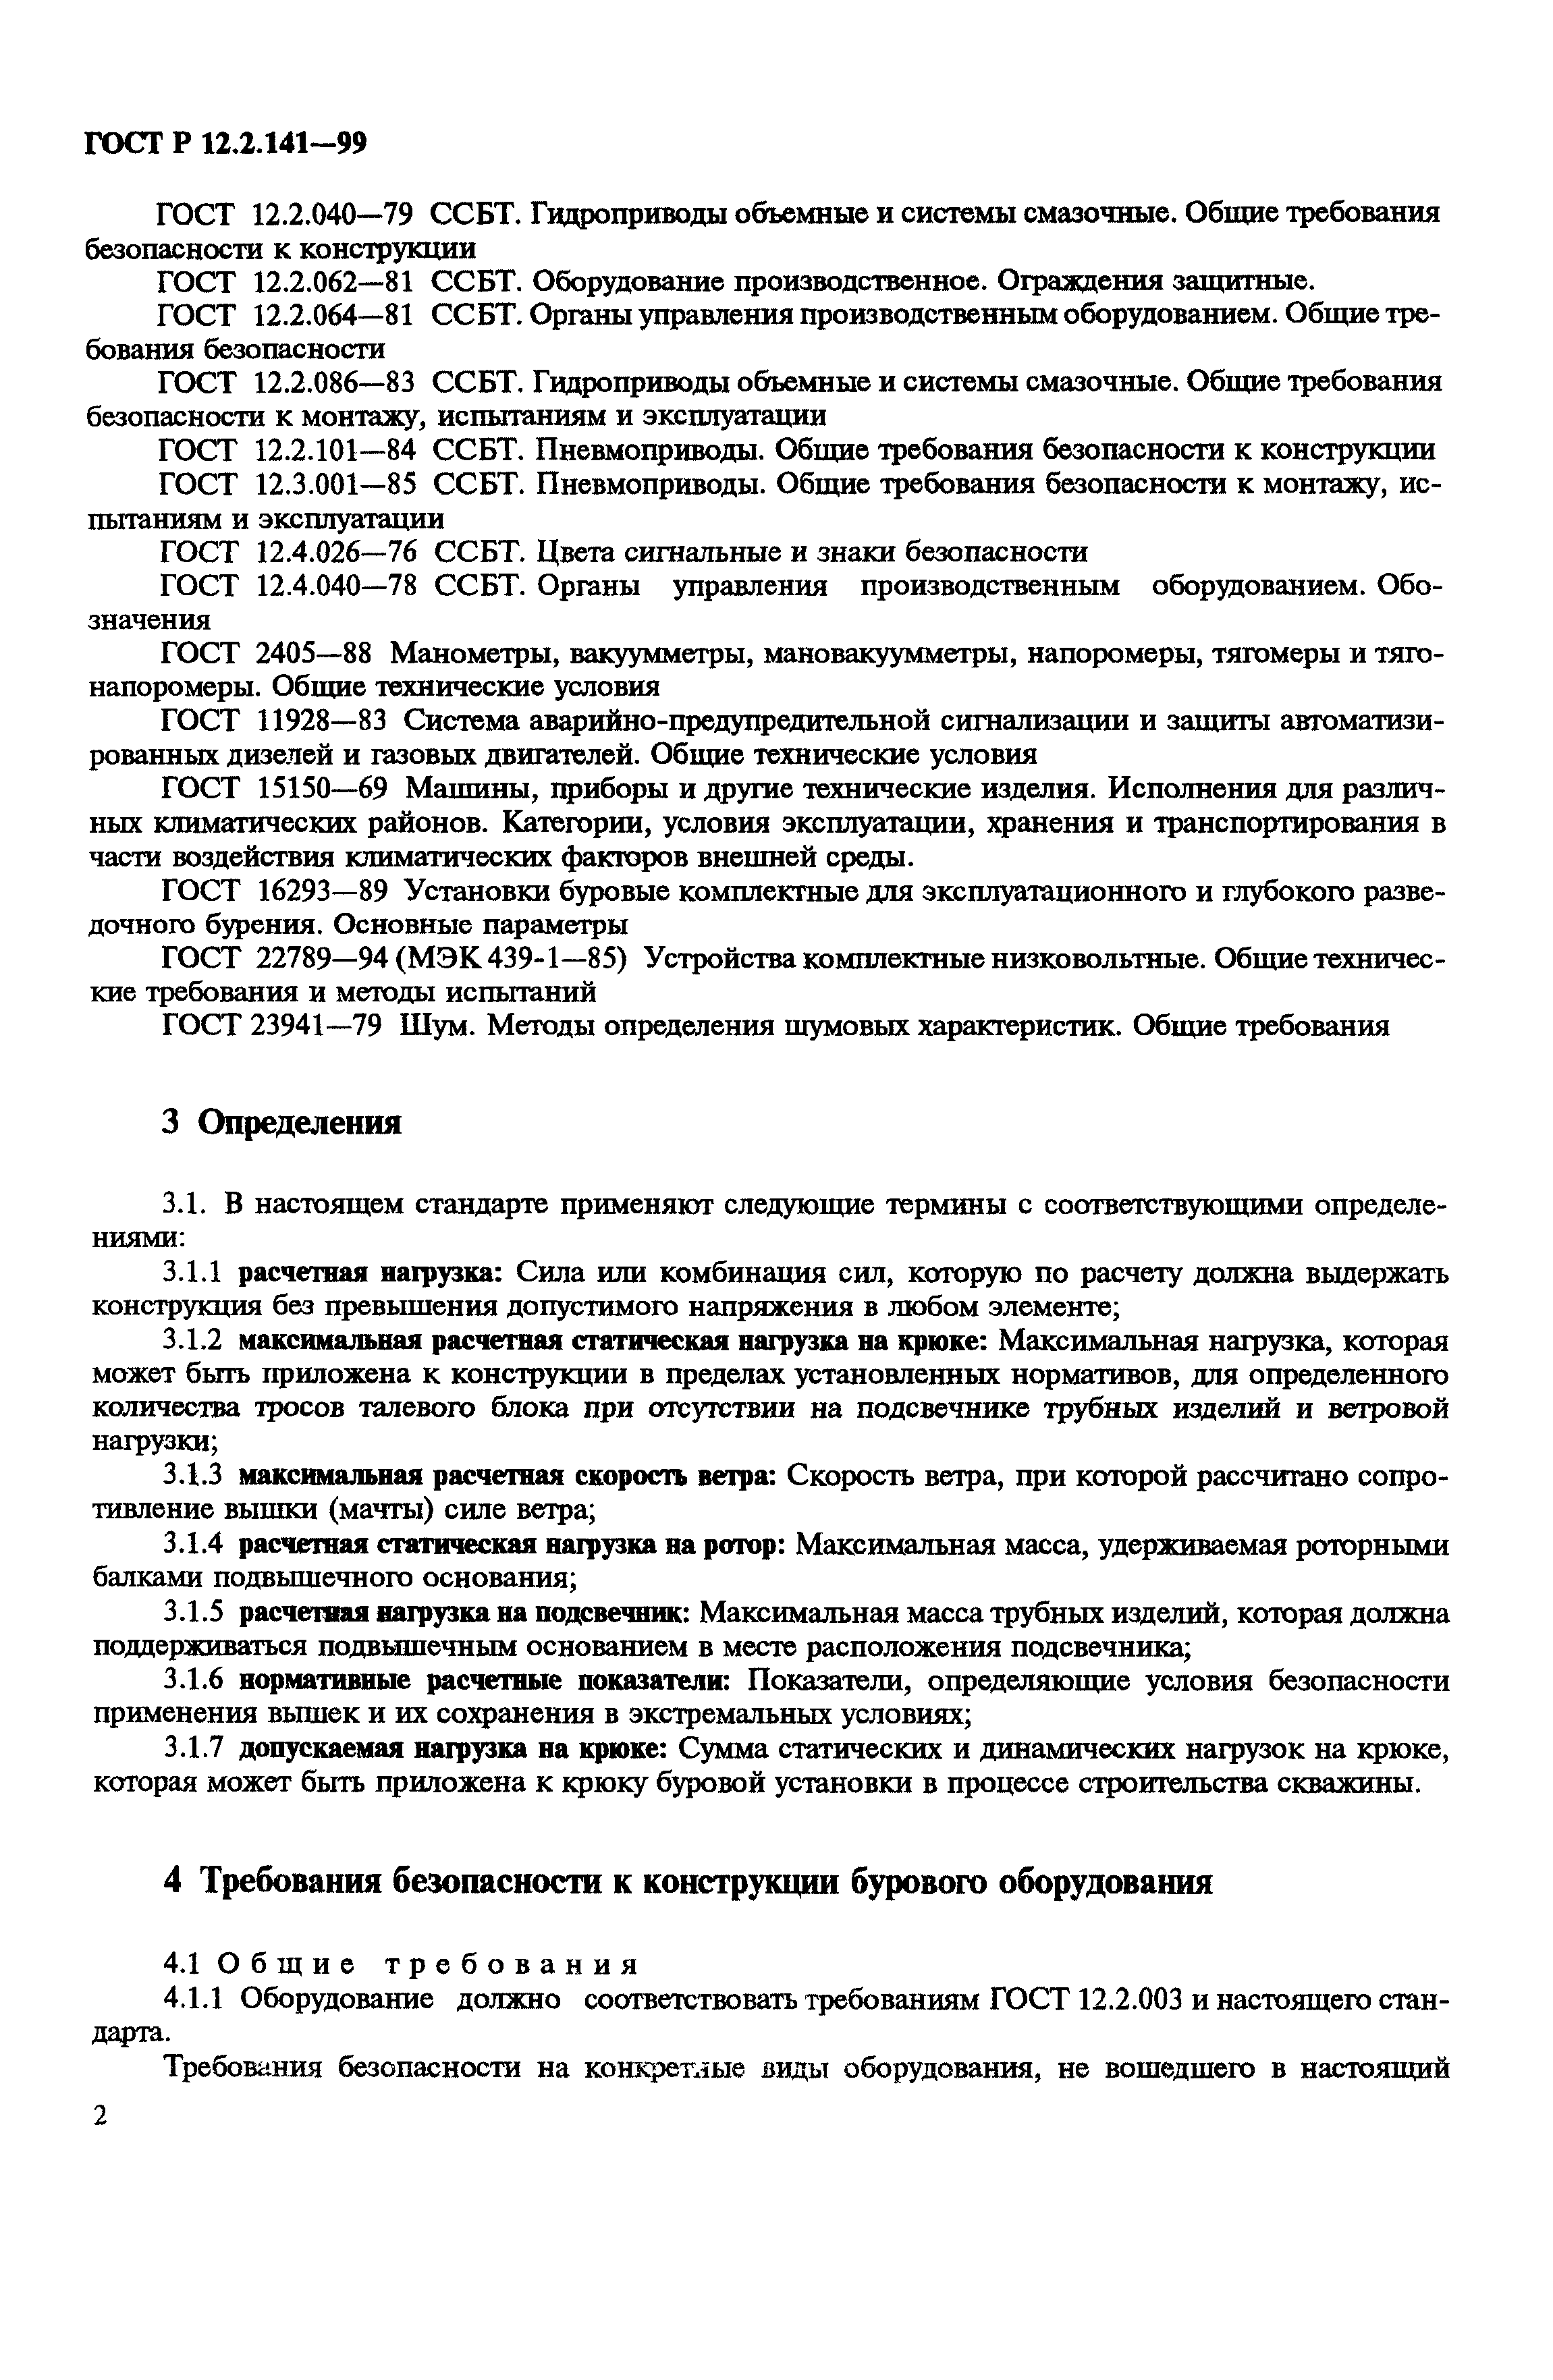 ГОСТ Р 12.2.141-99